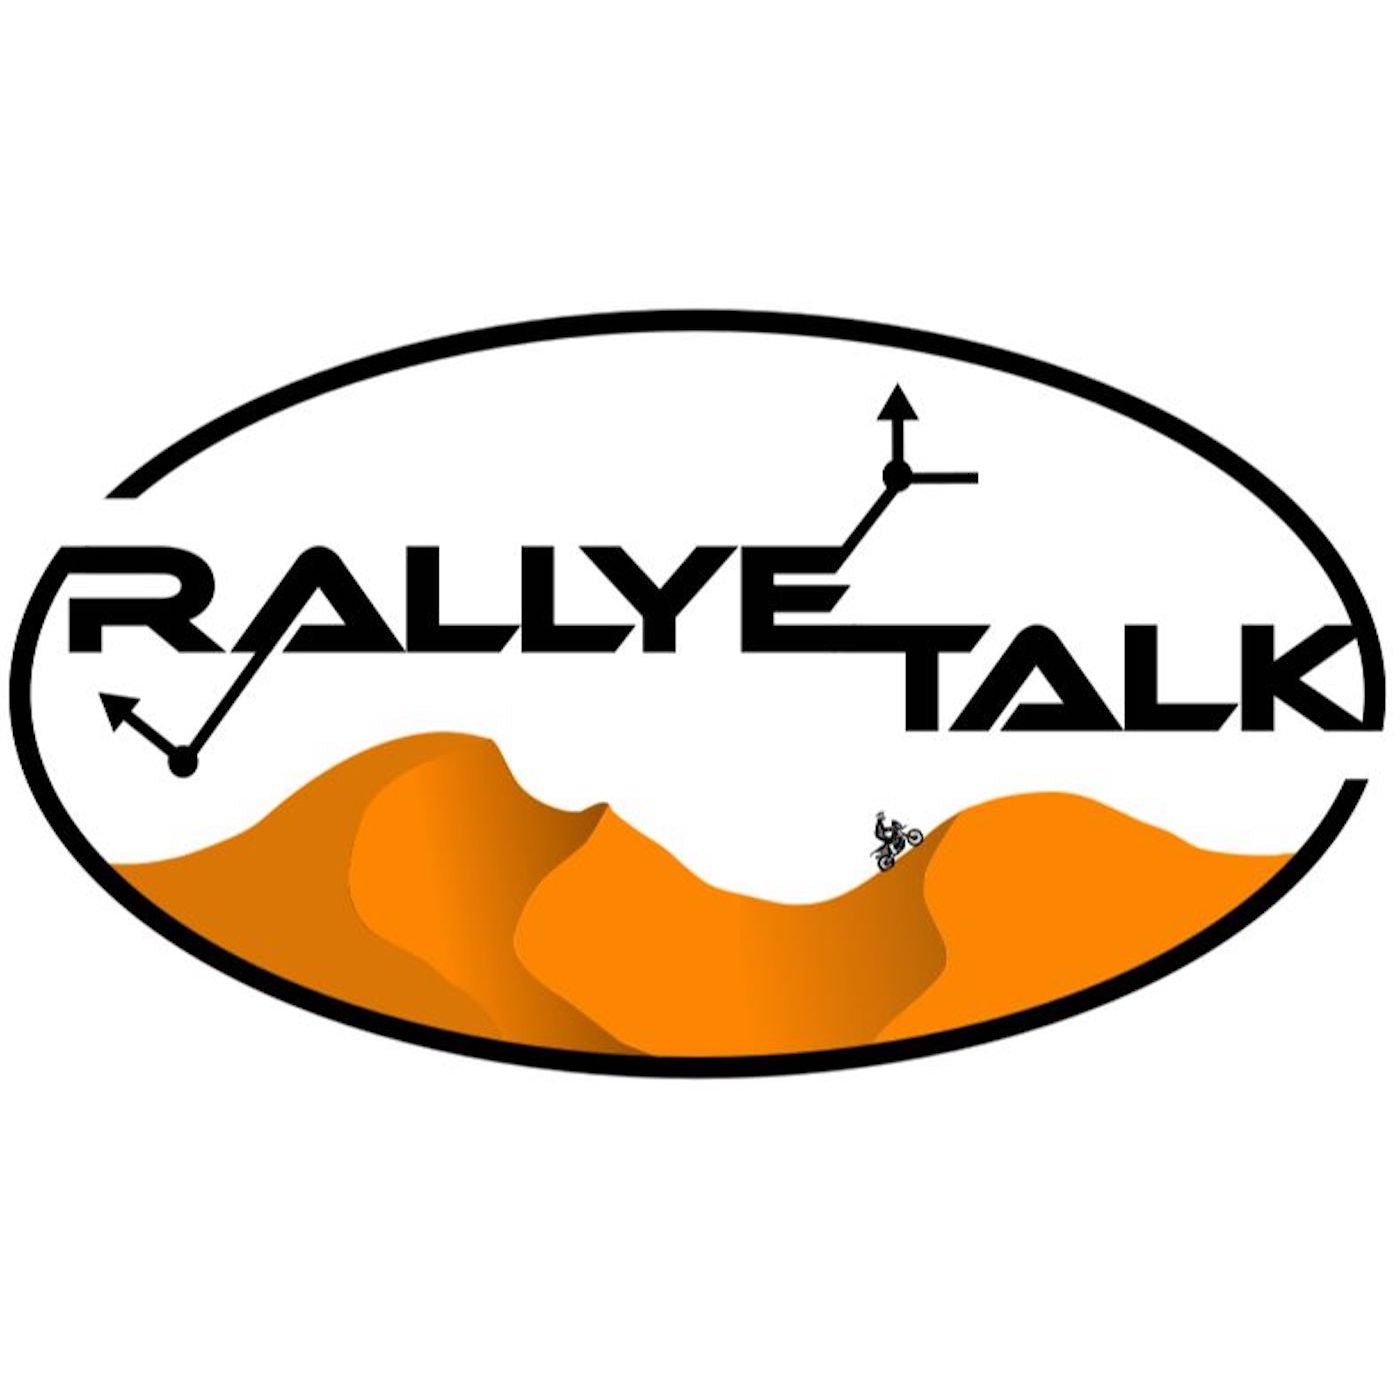 RallyeTalk